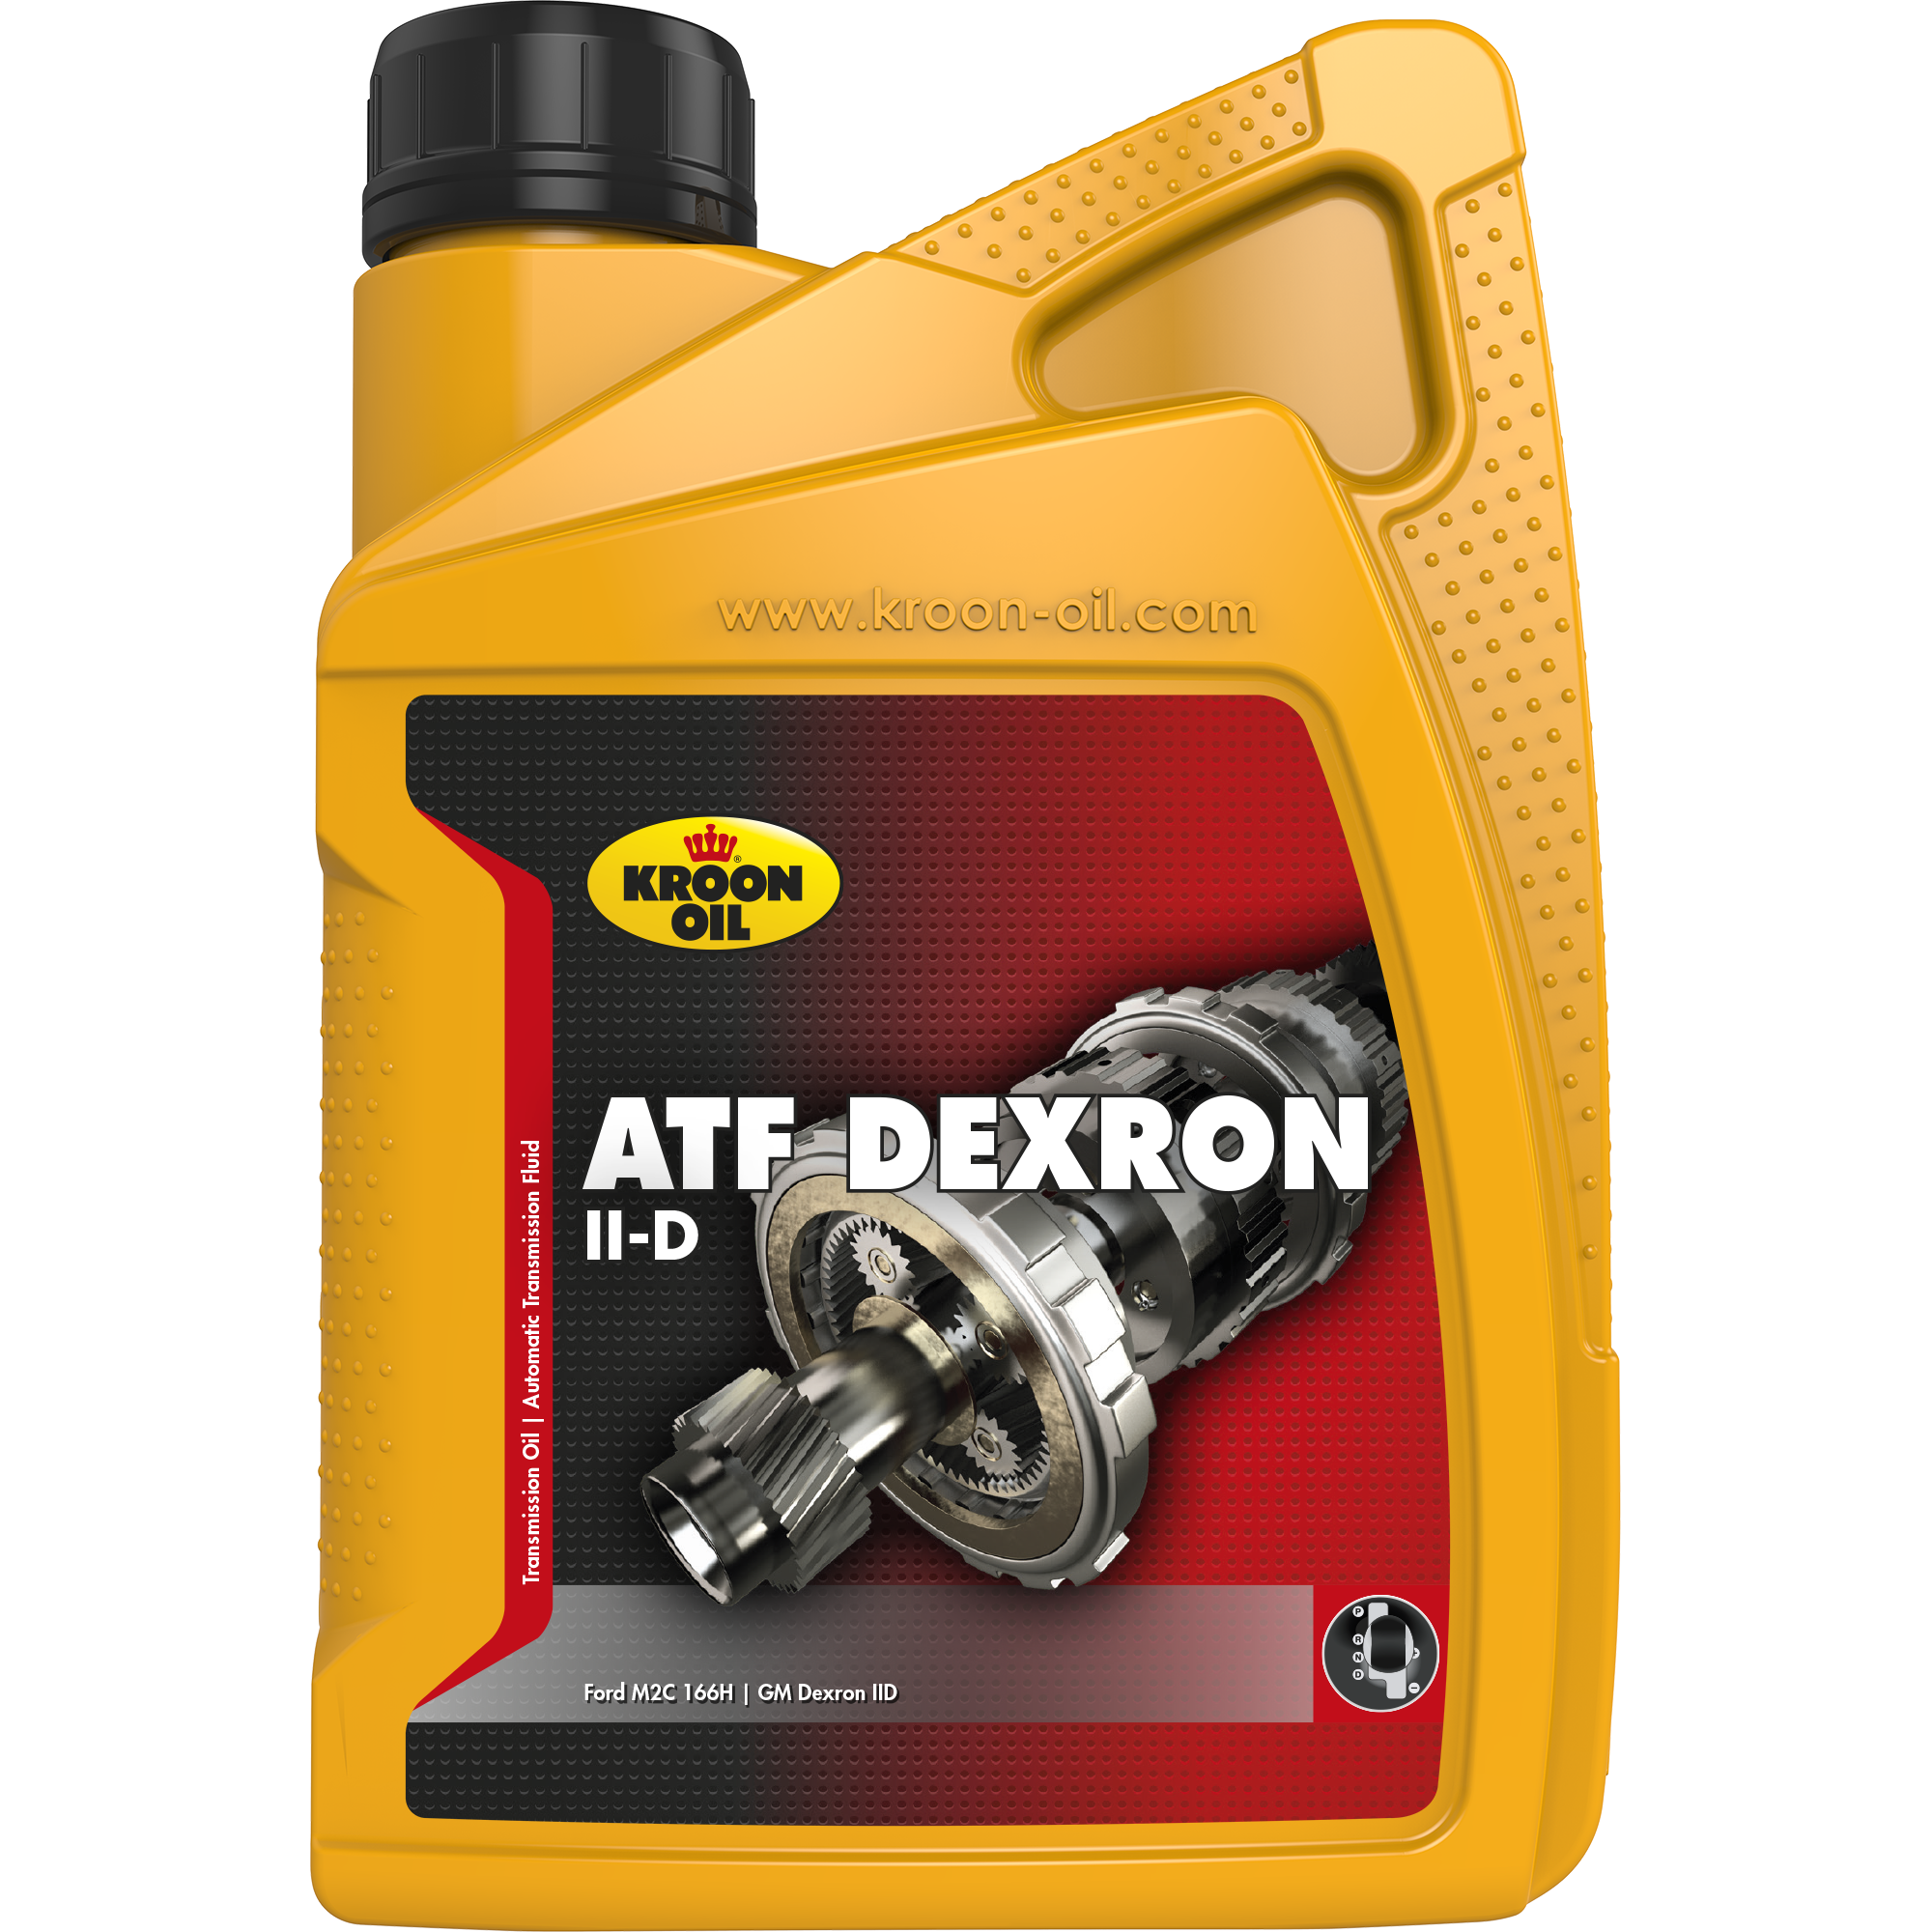 Kroon-Oil ATF Dexron II-D, 1 lt